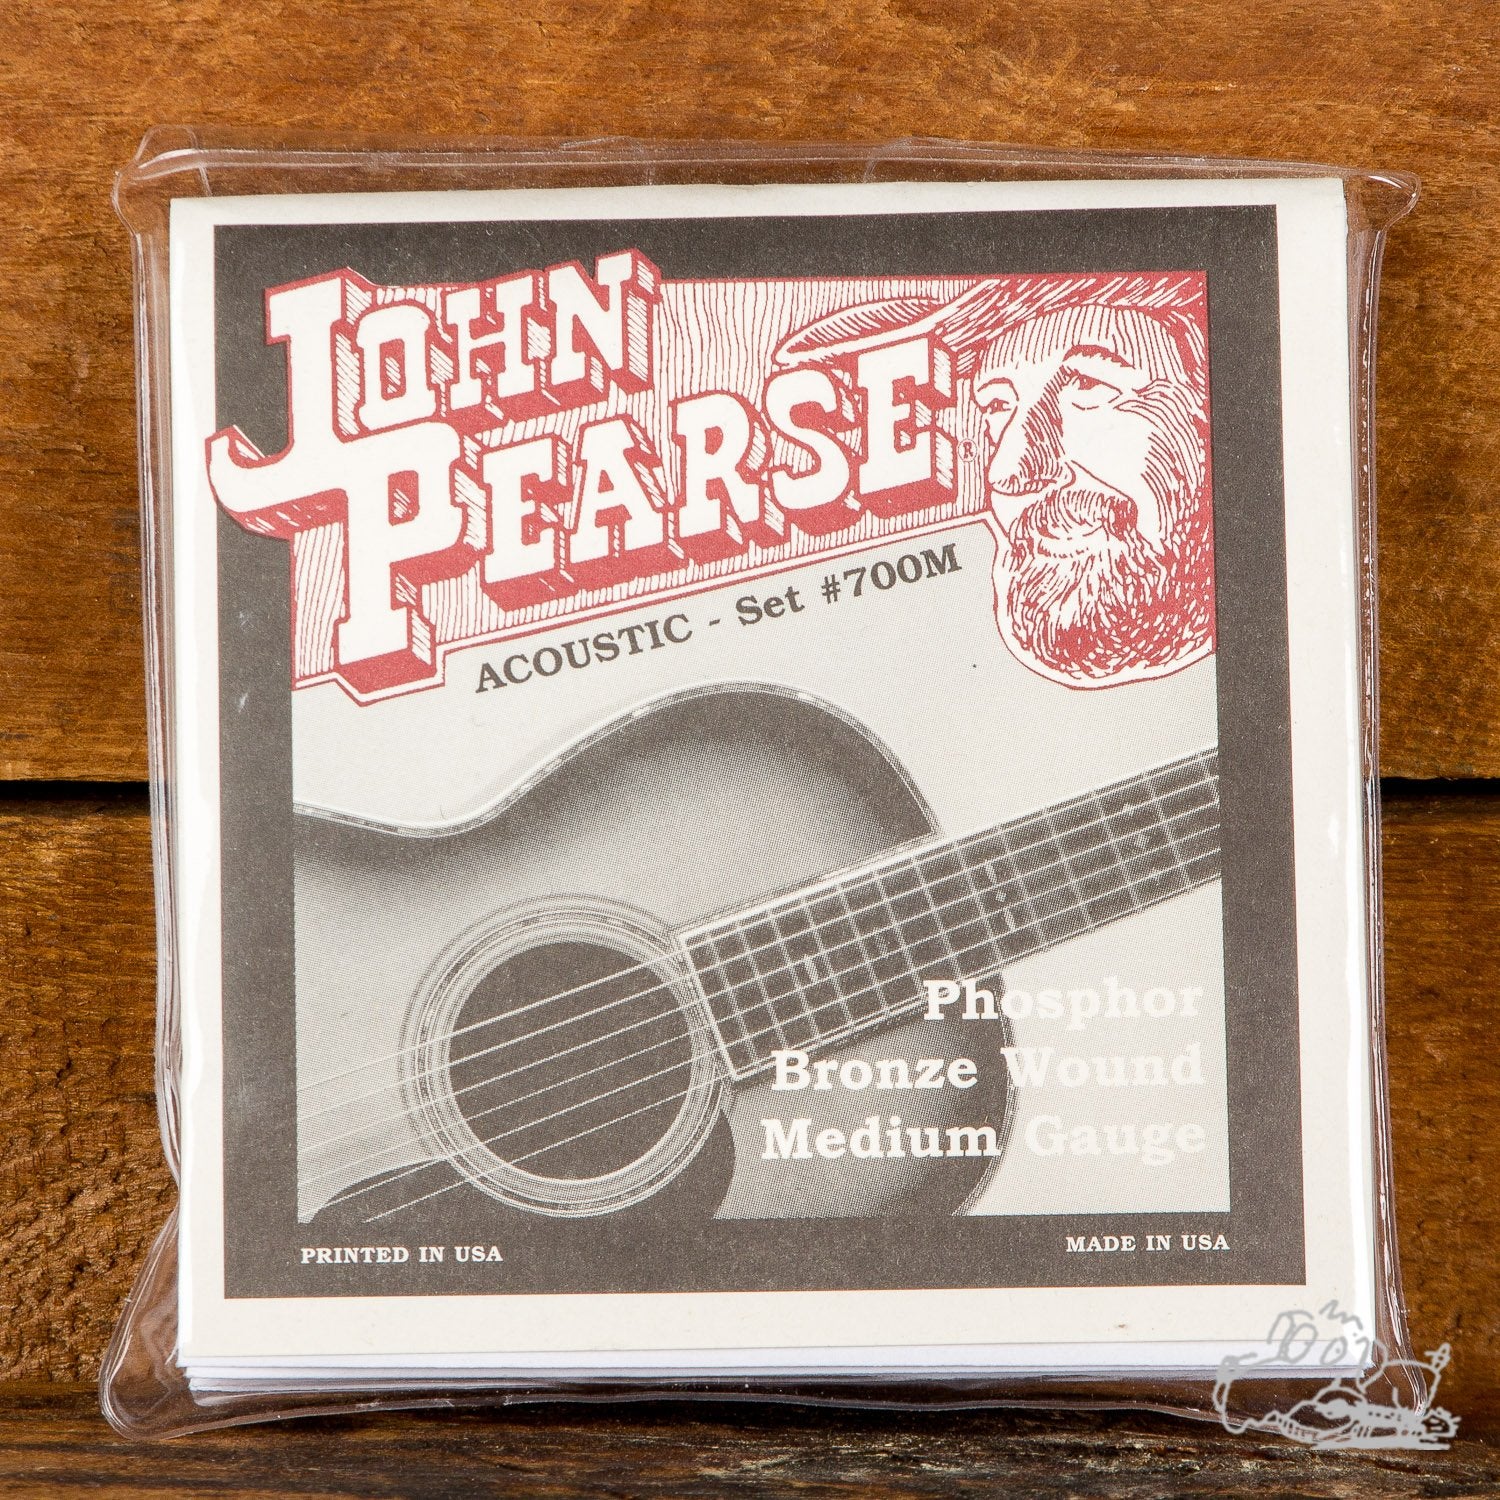 John Pearse 13-56 Phpsphor Bronze Medium Acoustic Guitar Strings